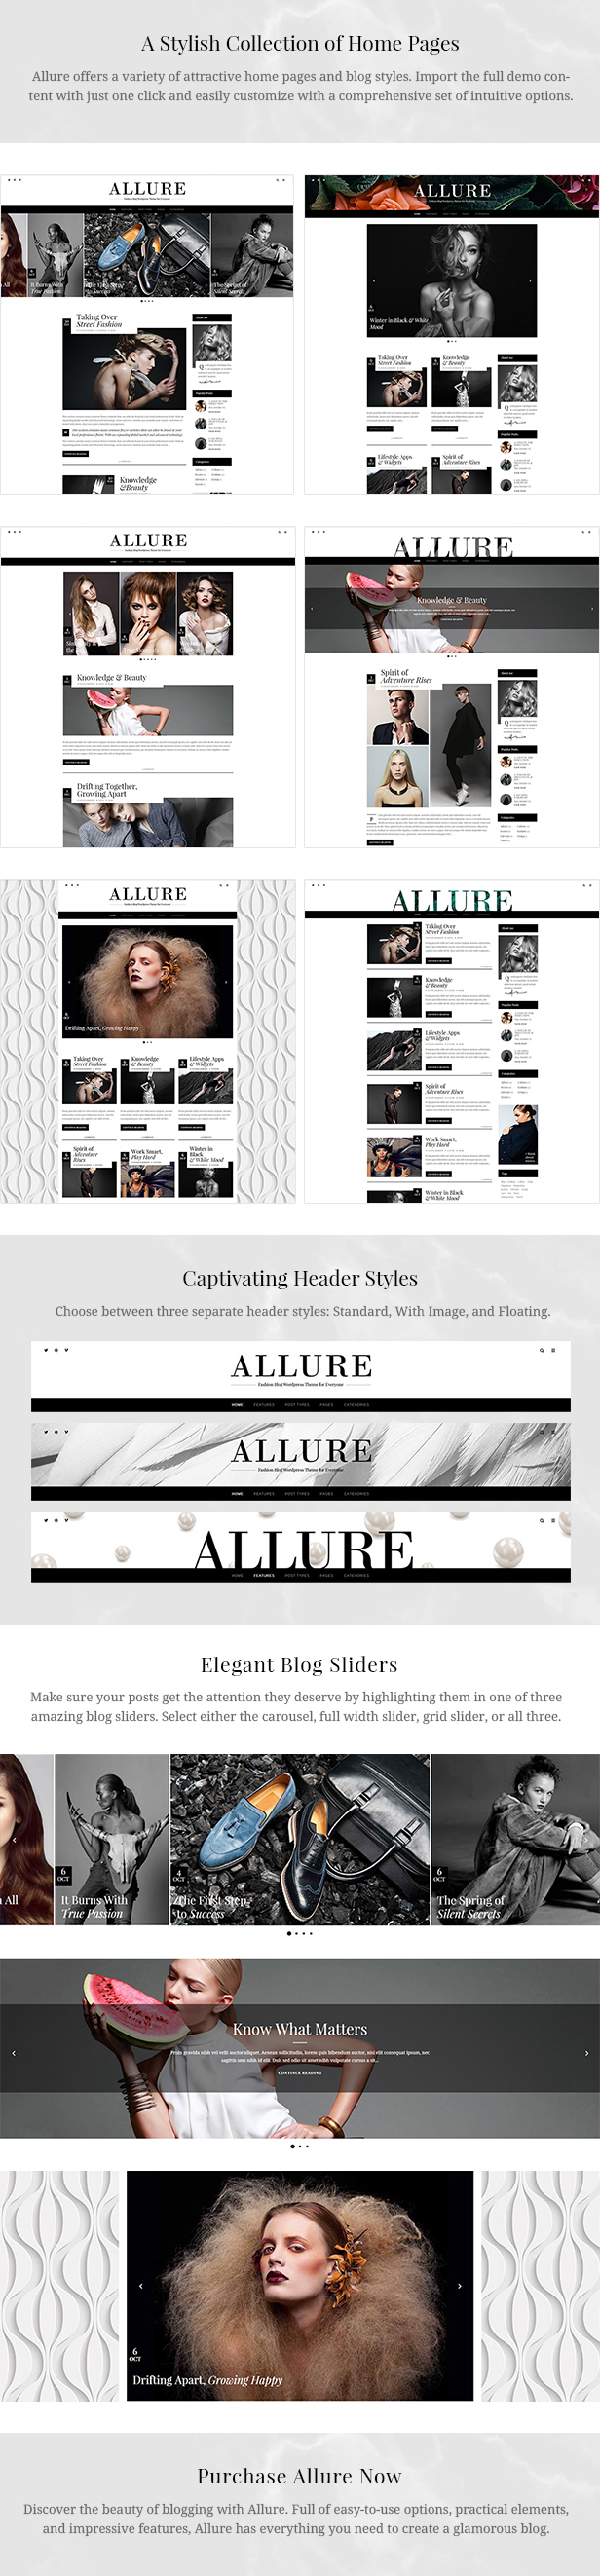 Allure - Beauty & Fashion Blog Theme - 1